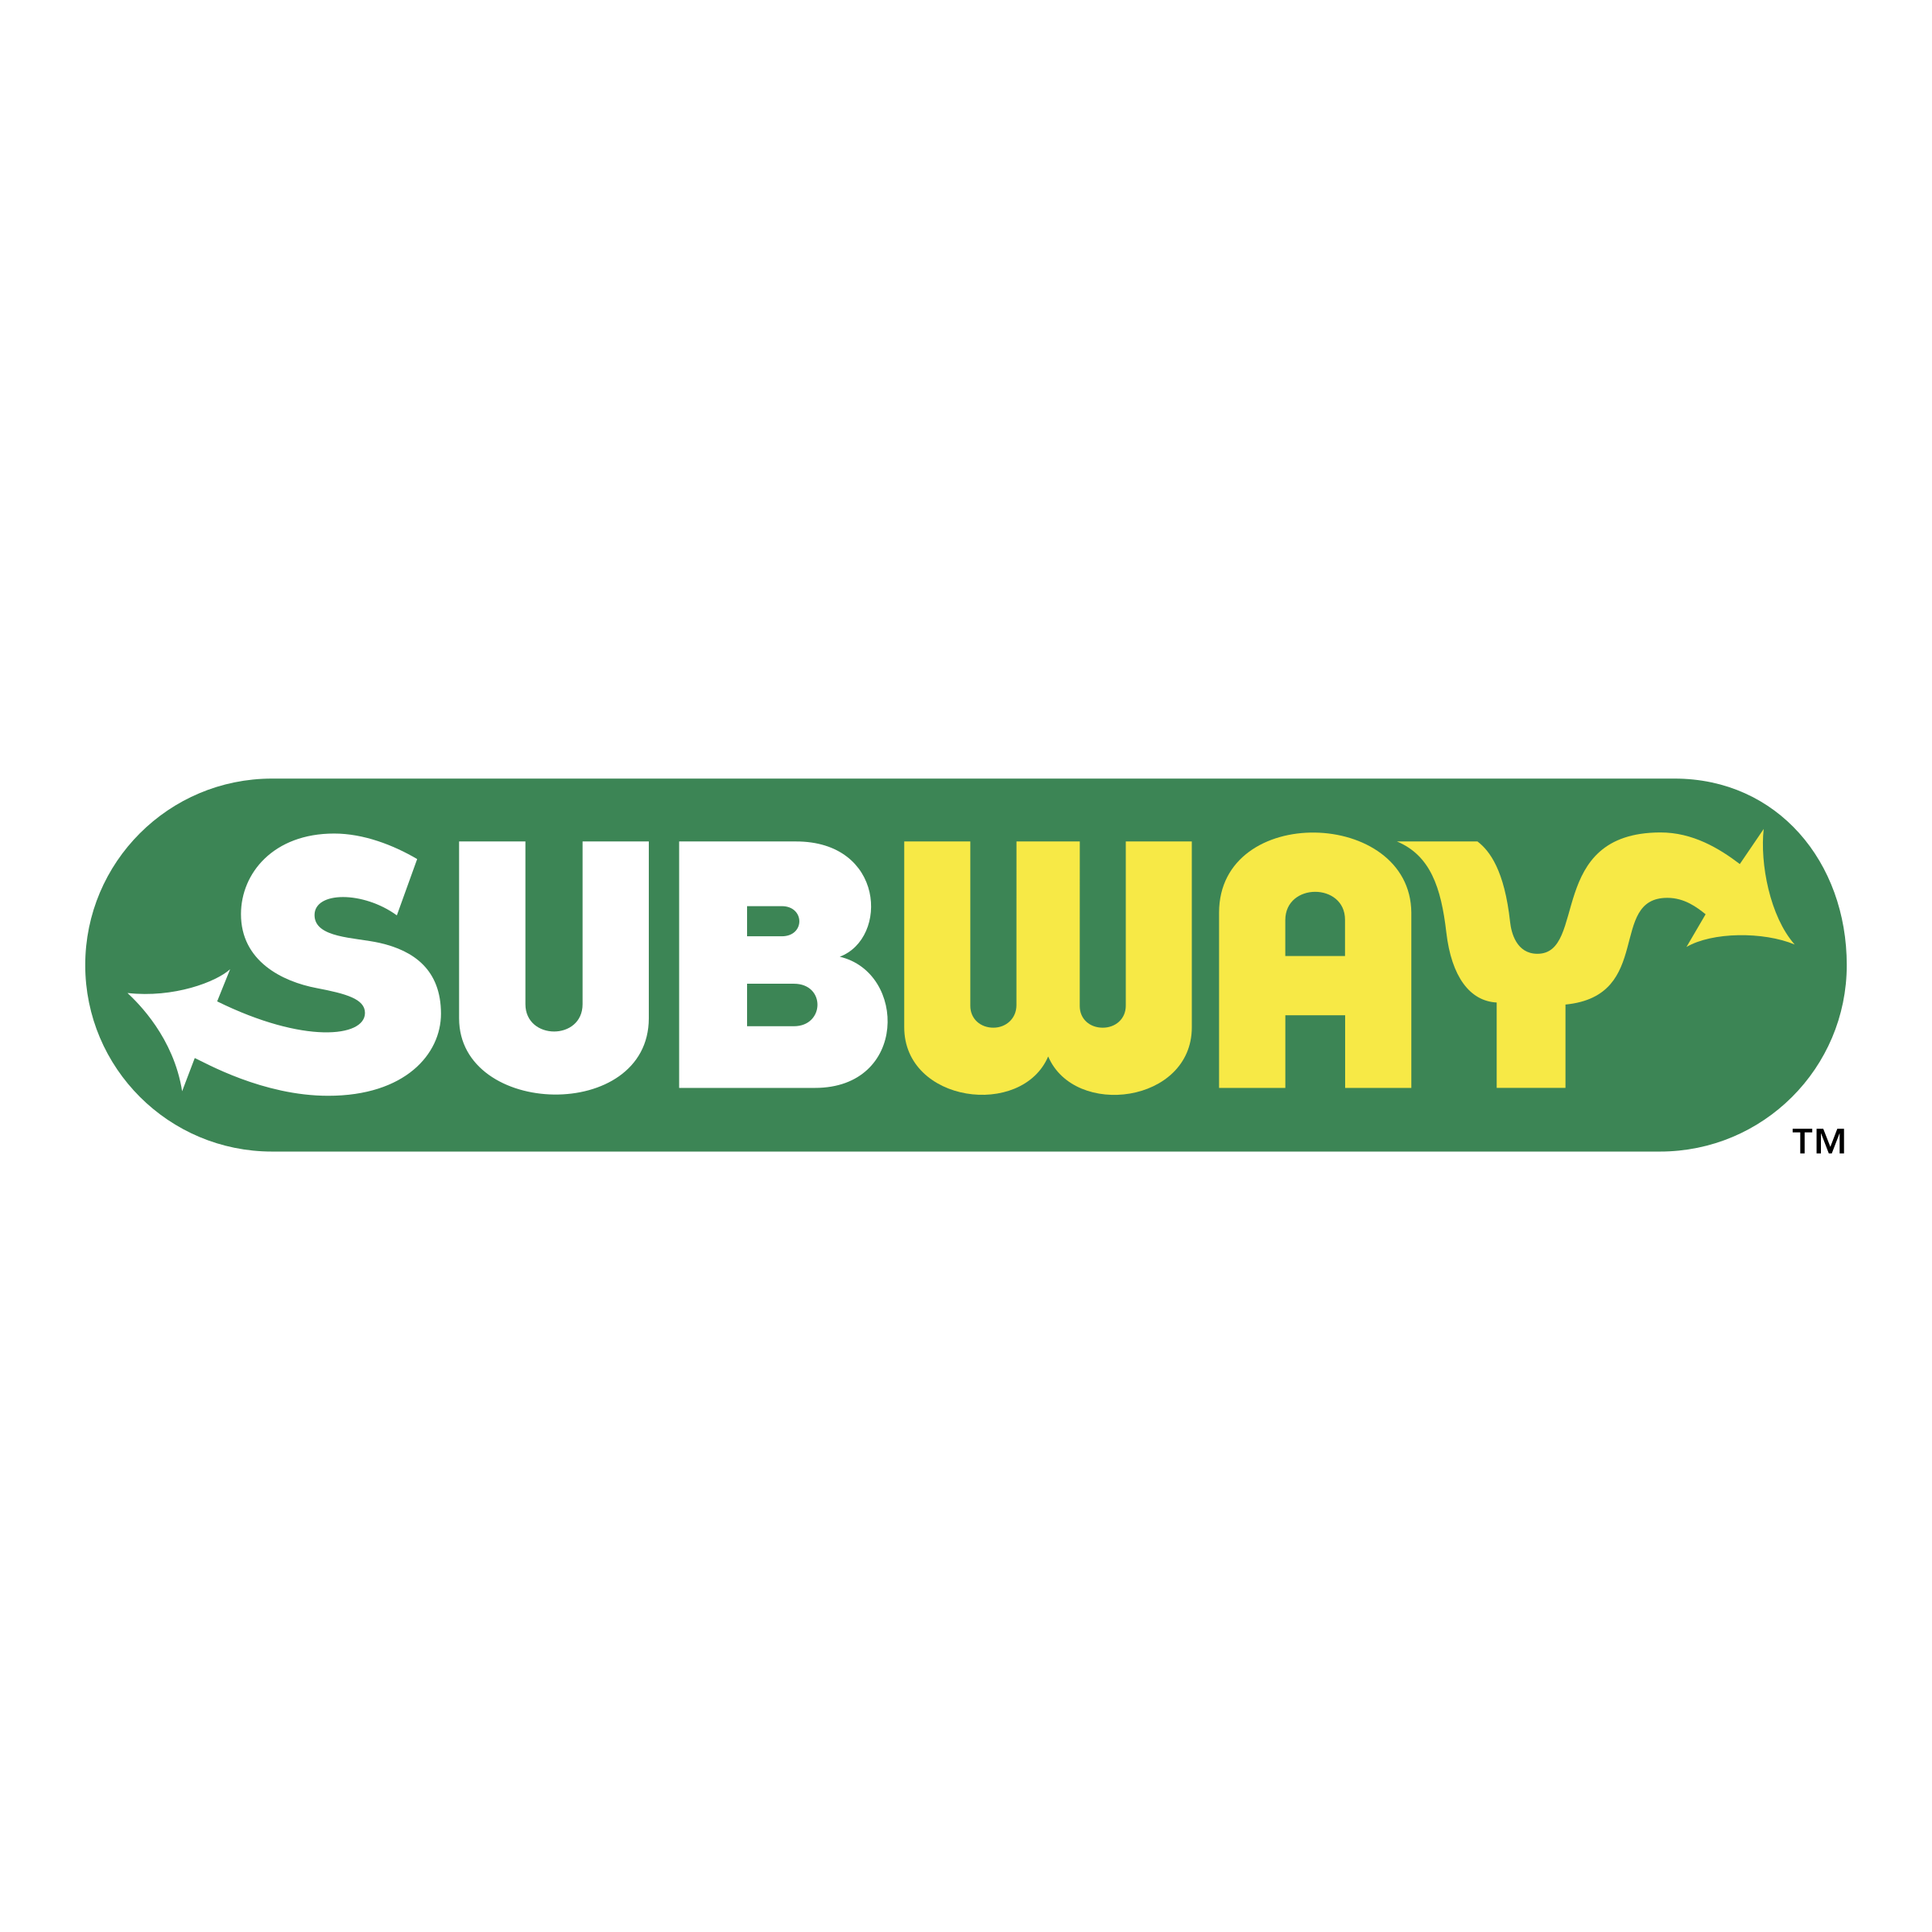 Subway Logo PNG Images